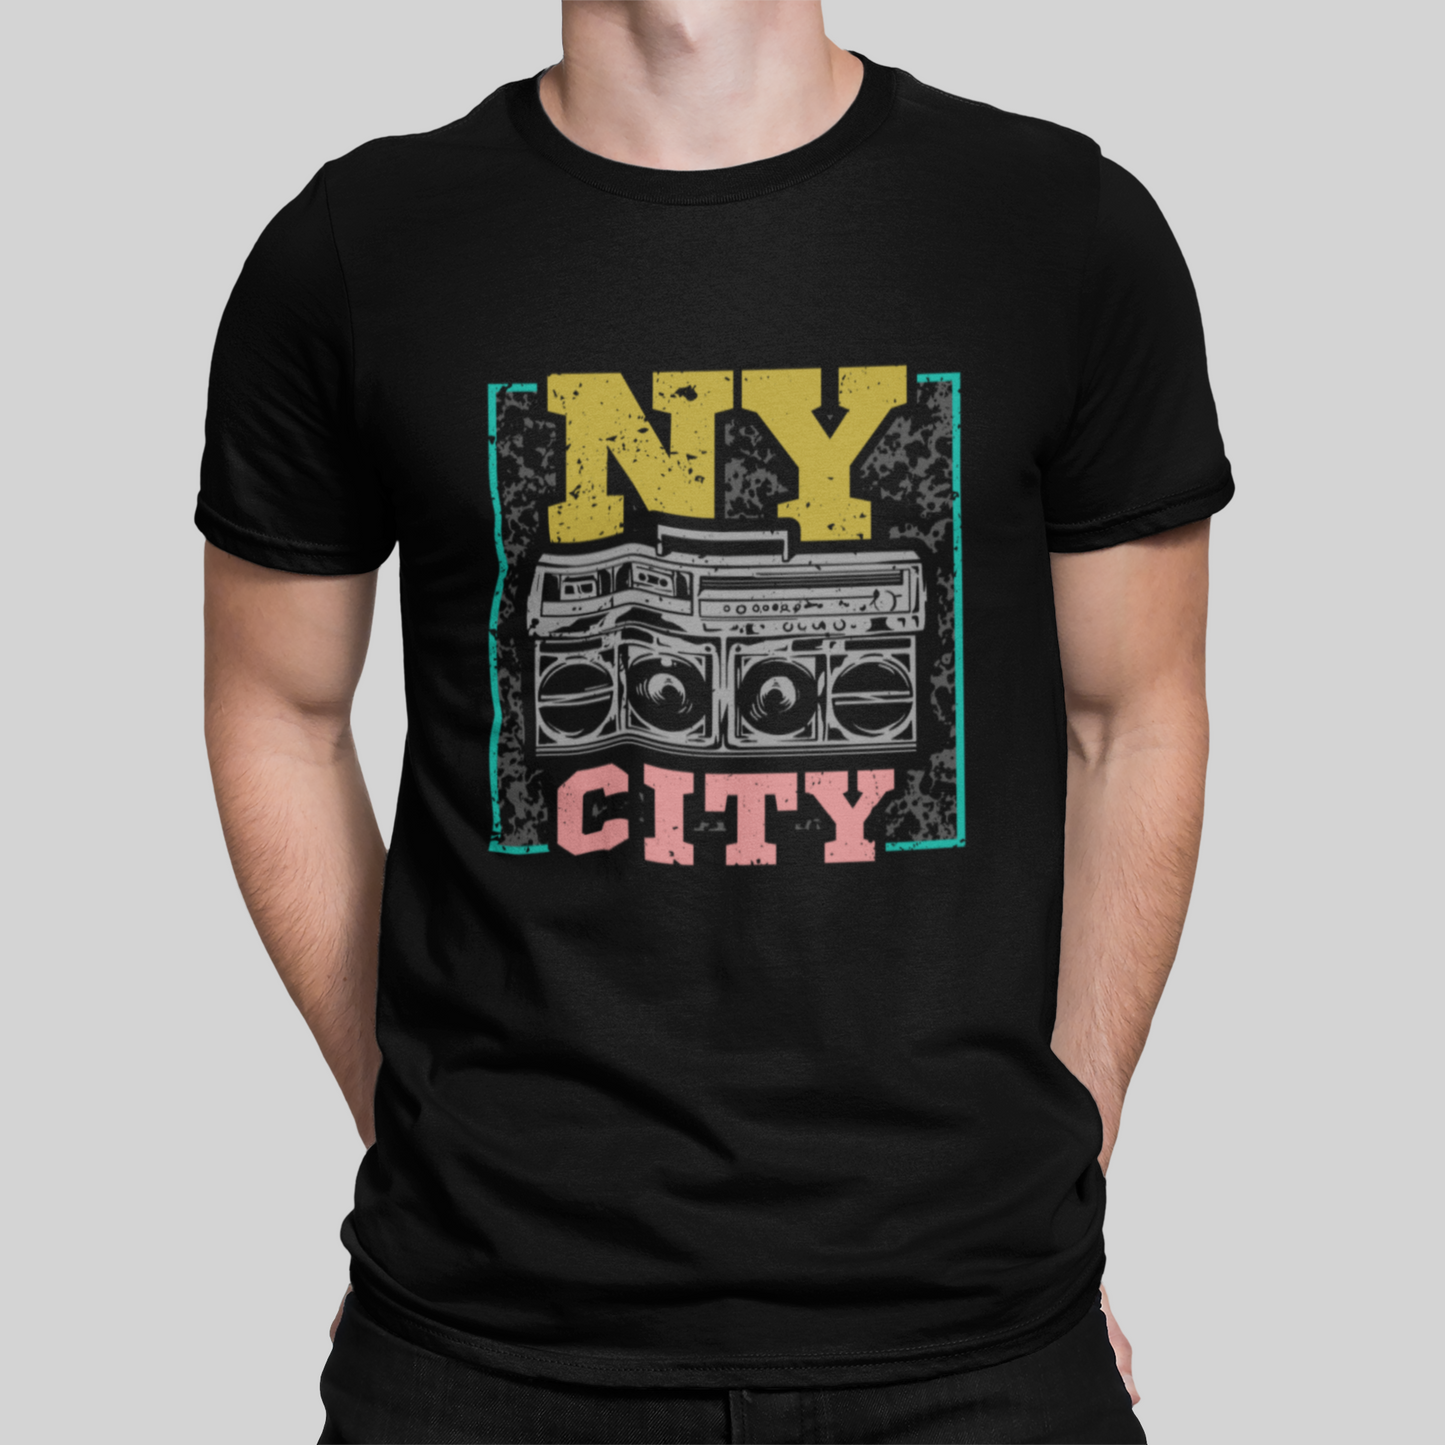 NY City Black T-Shirt For Men